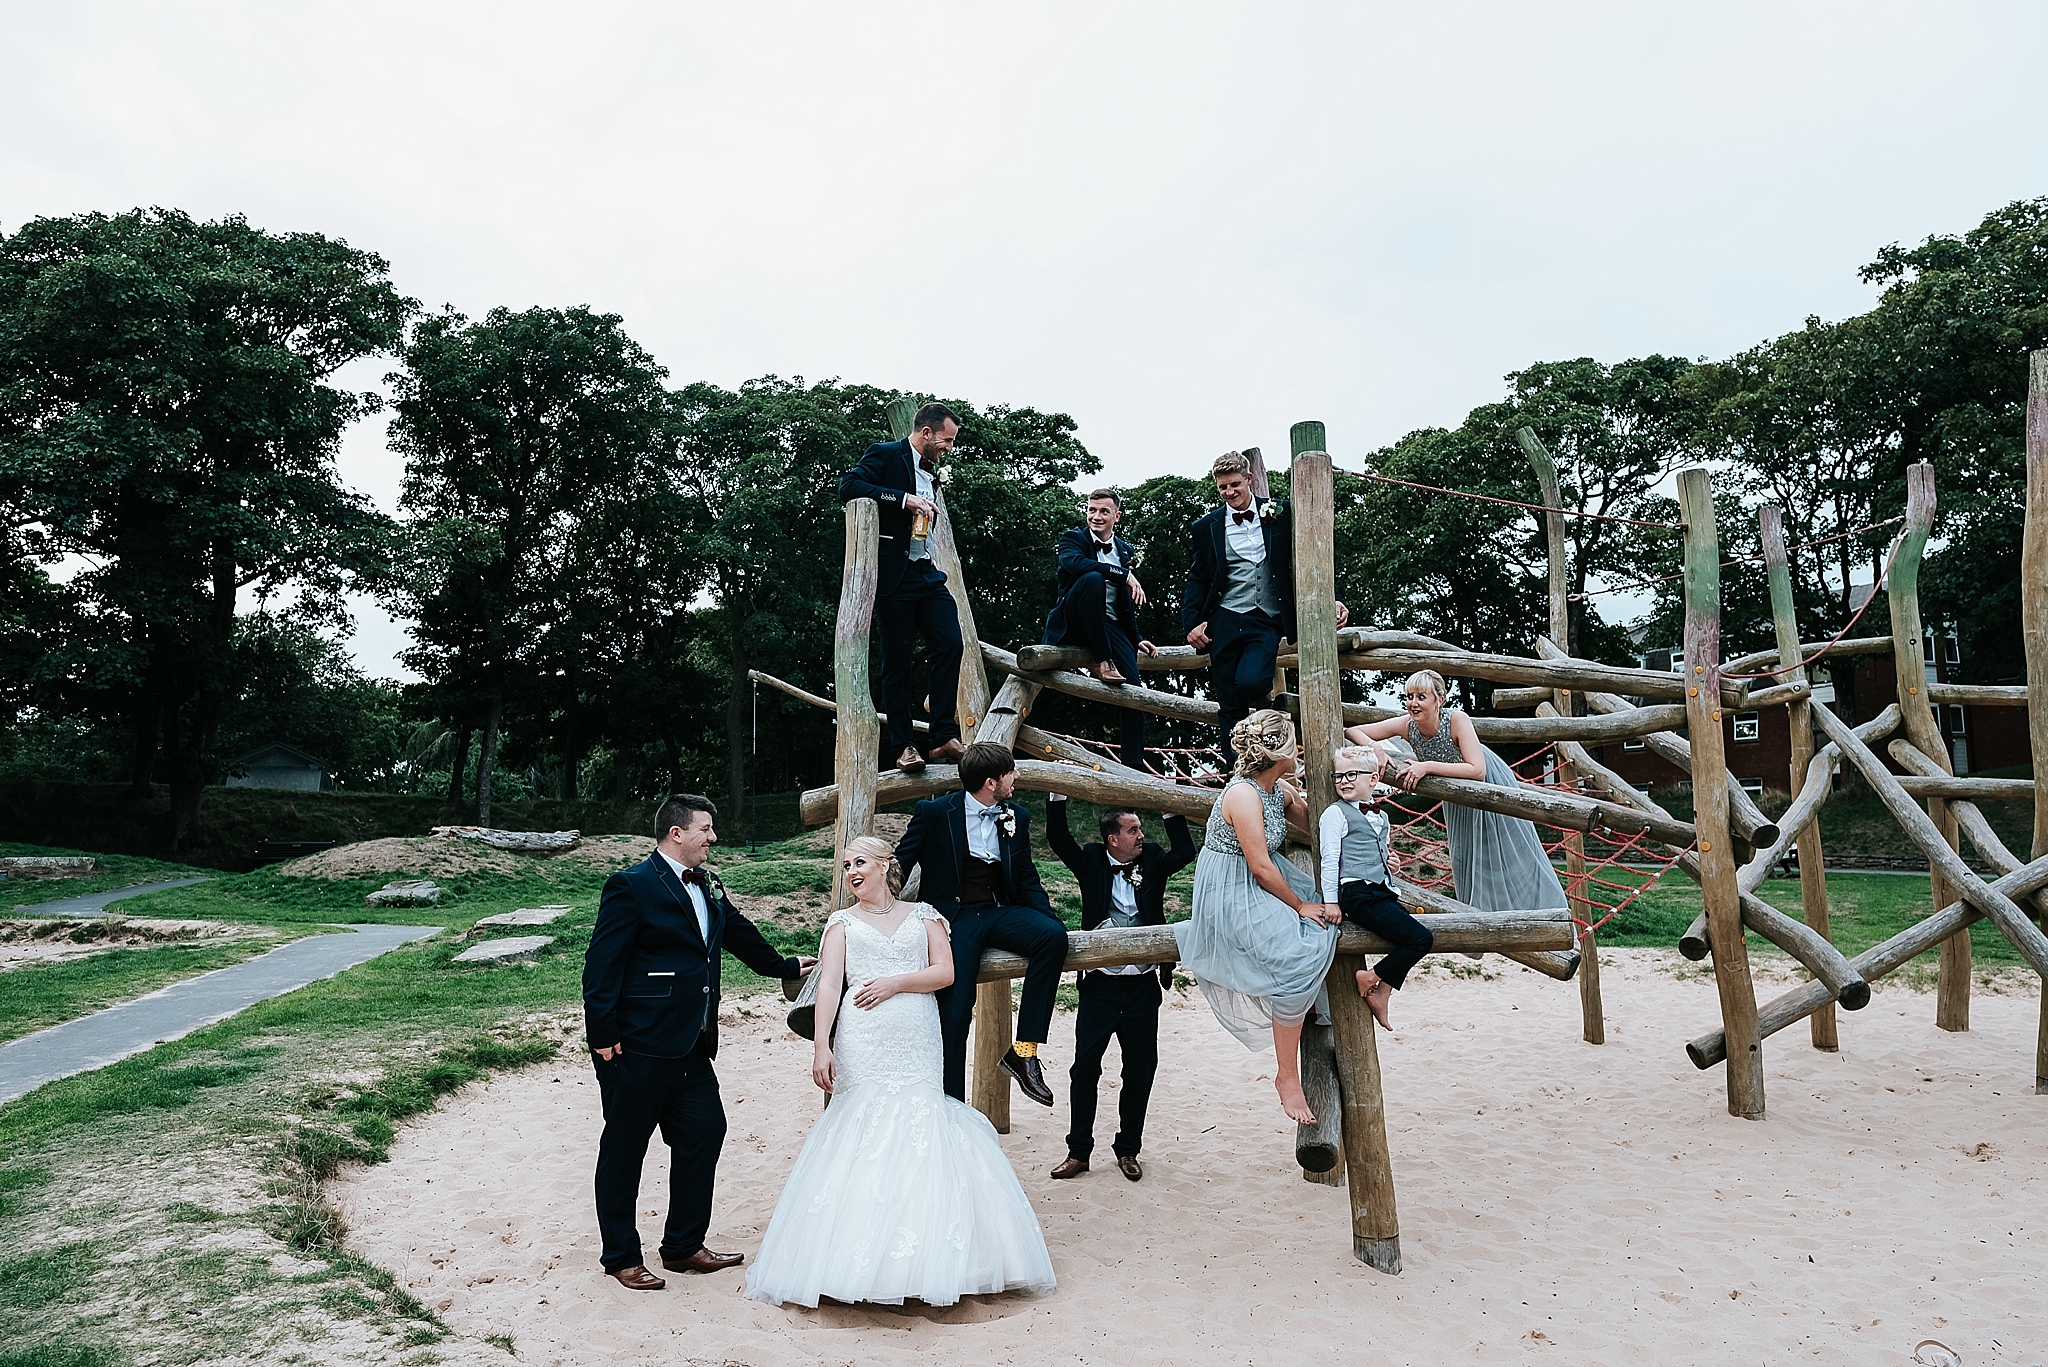 bridal group pictures in ashton park, st annes 